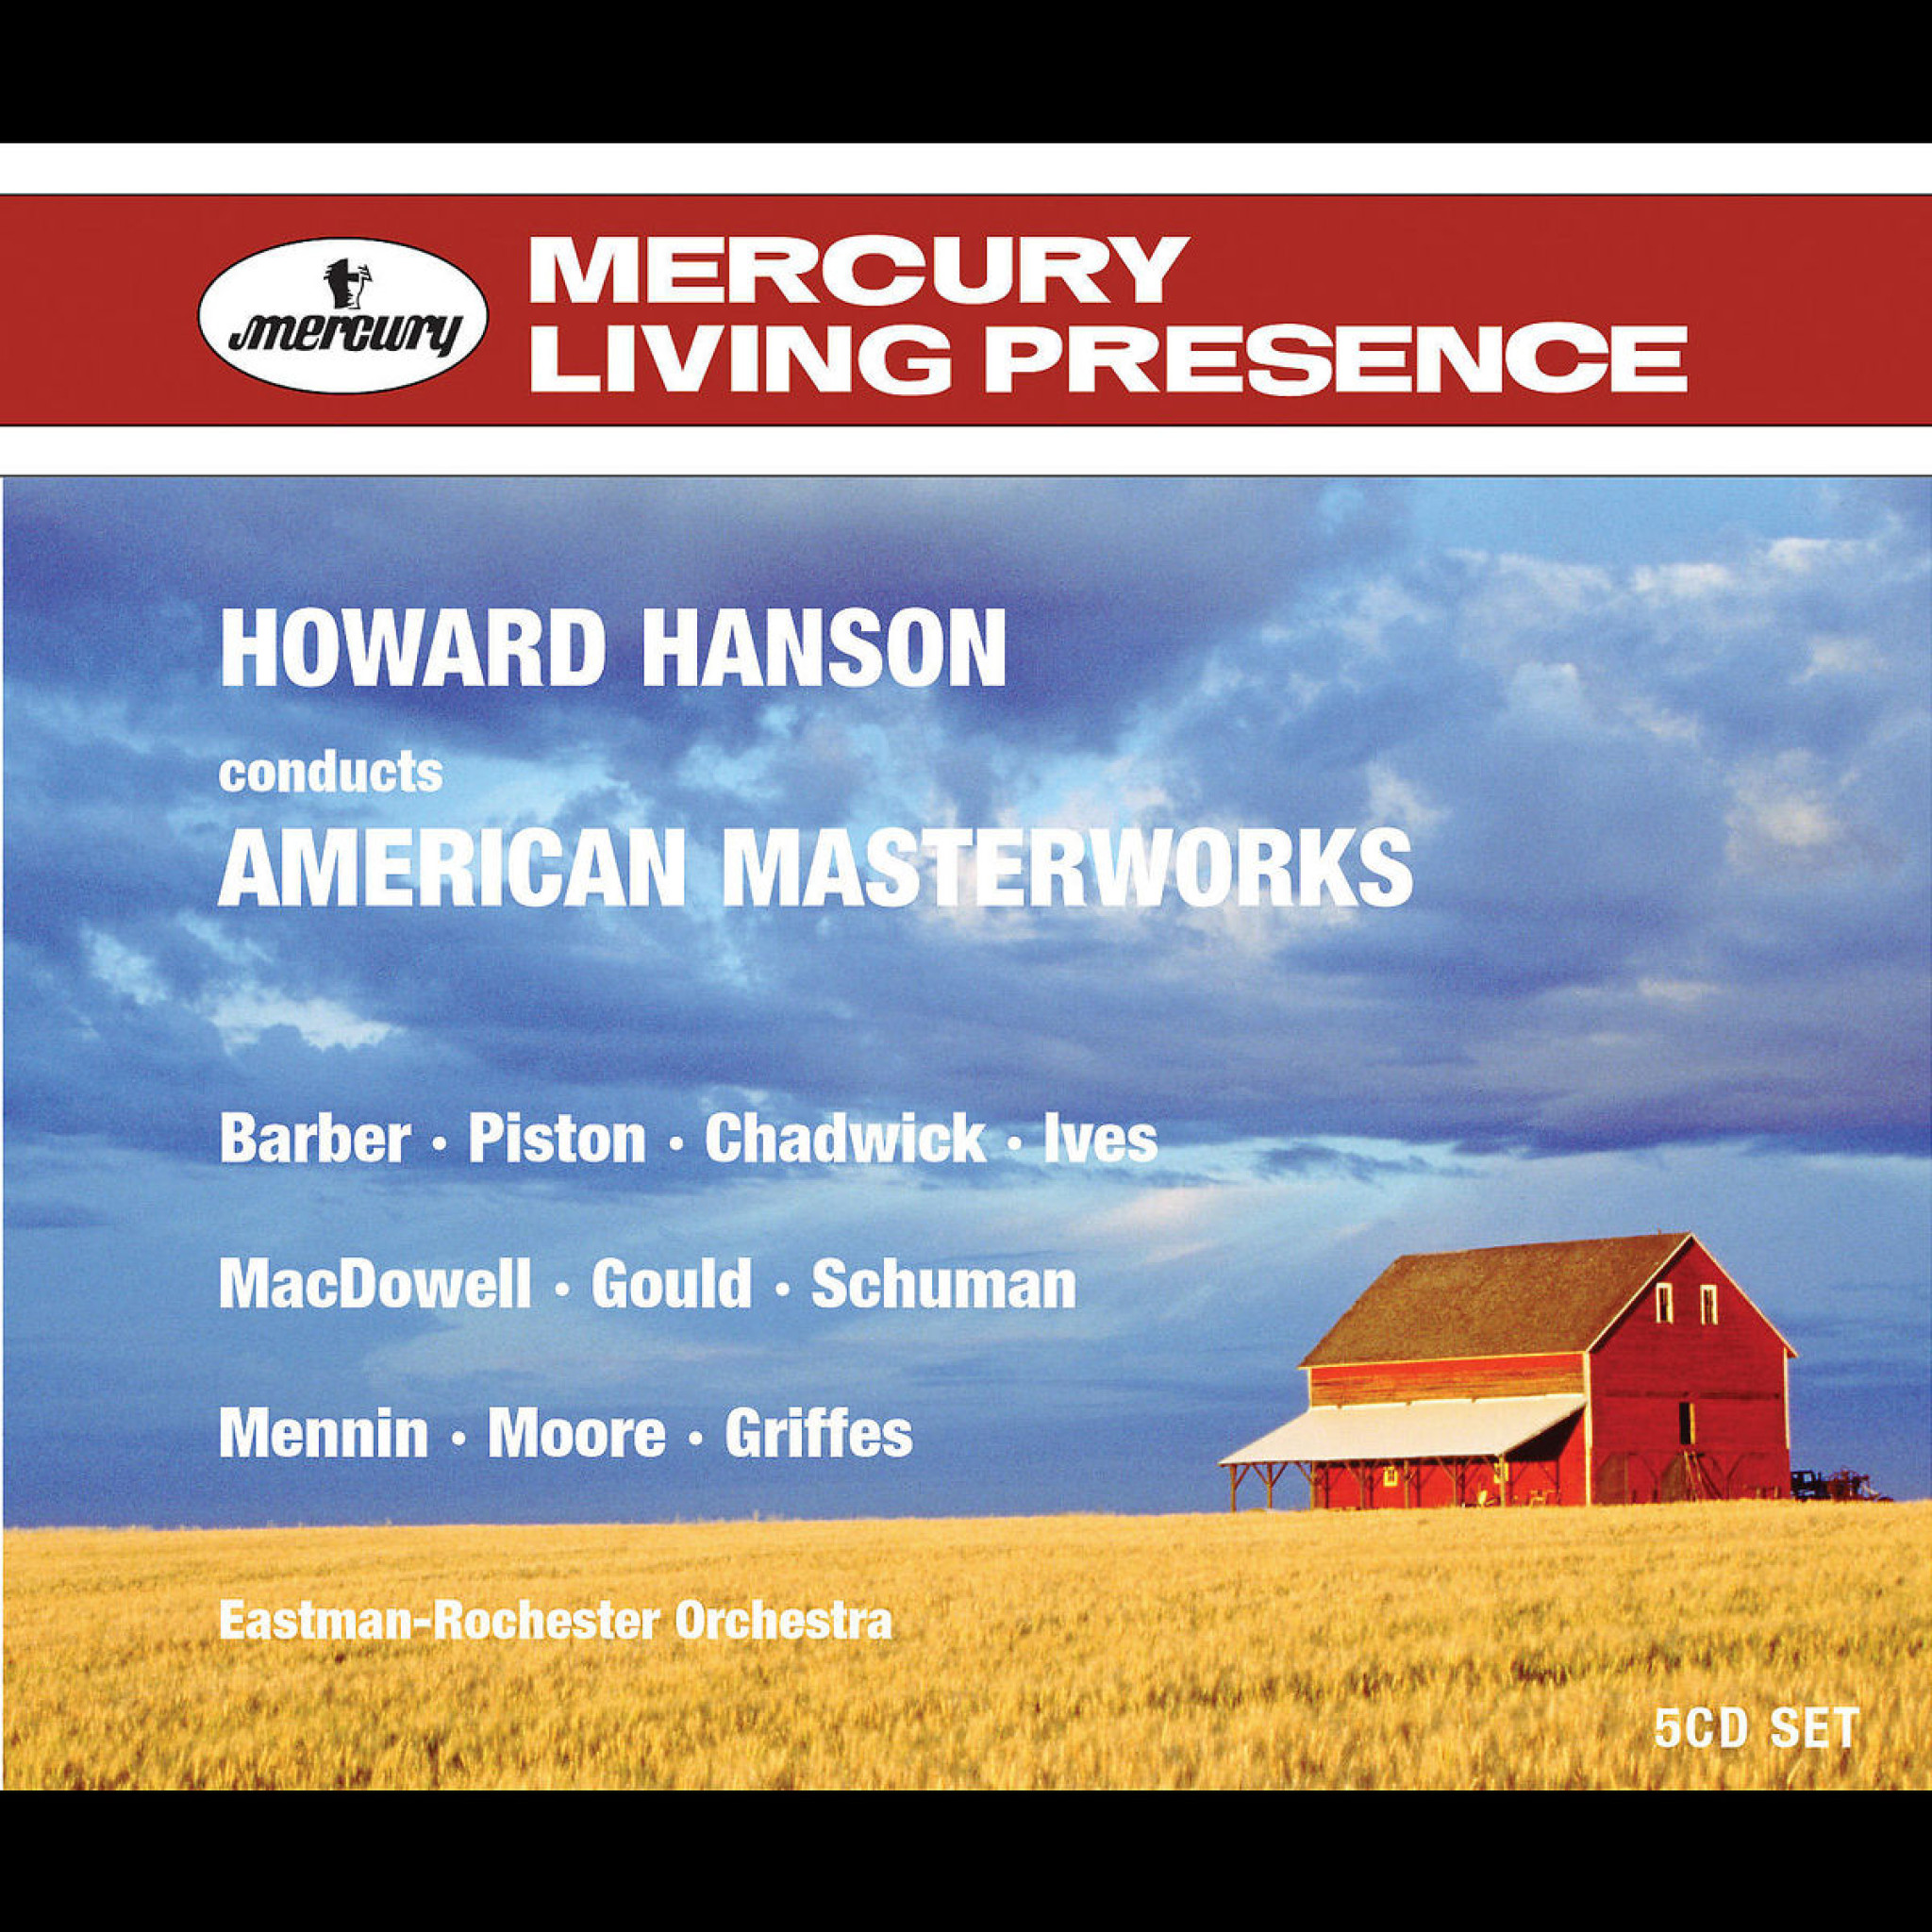 HOWARD HANSON CONDUCTS AMERICAN MASTERWORKS 